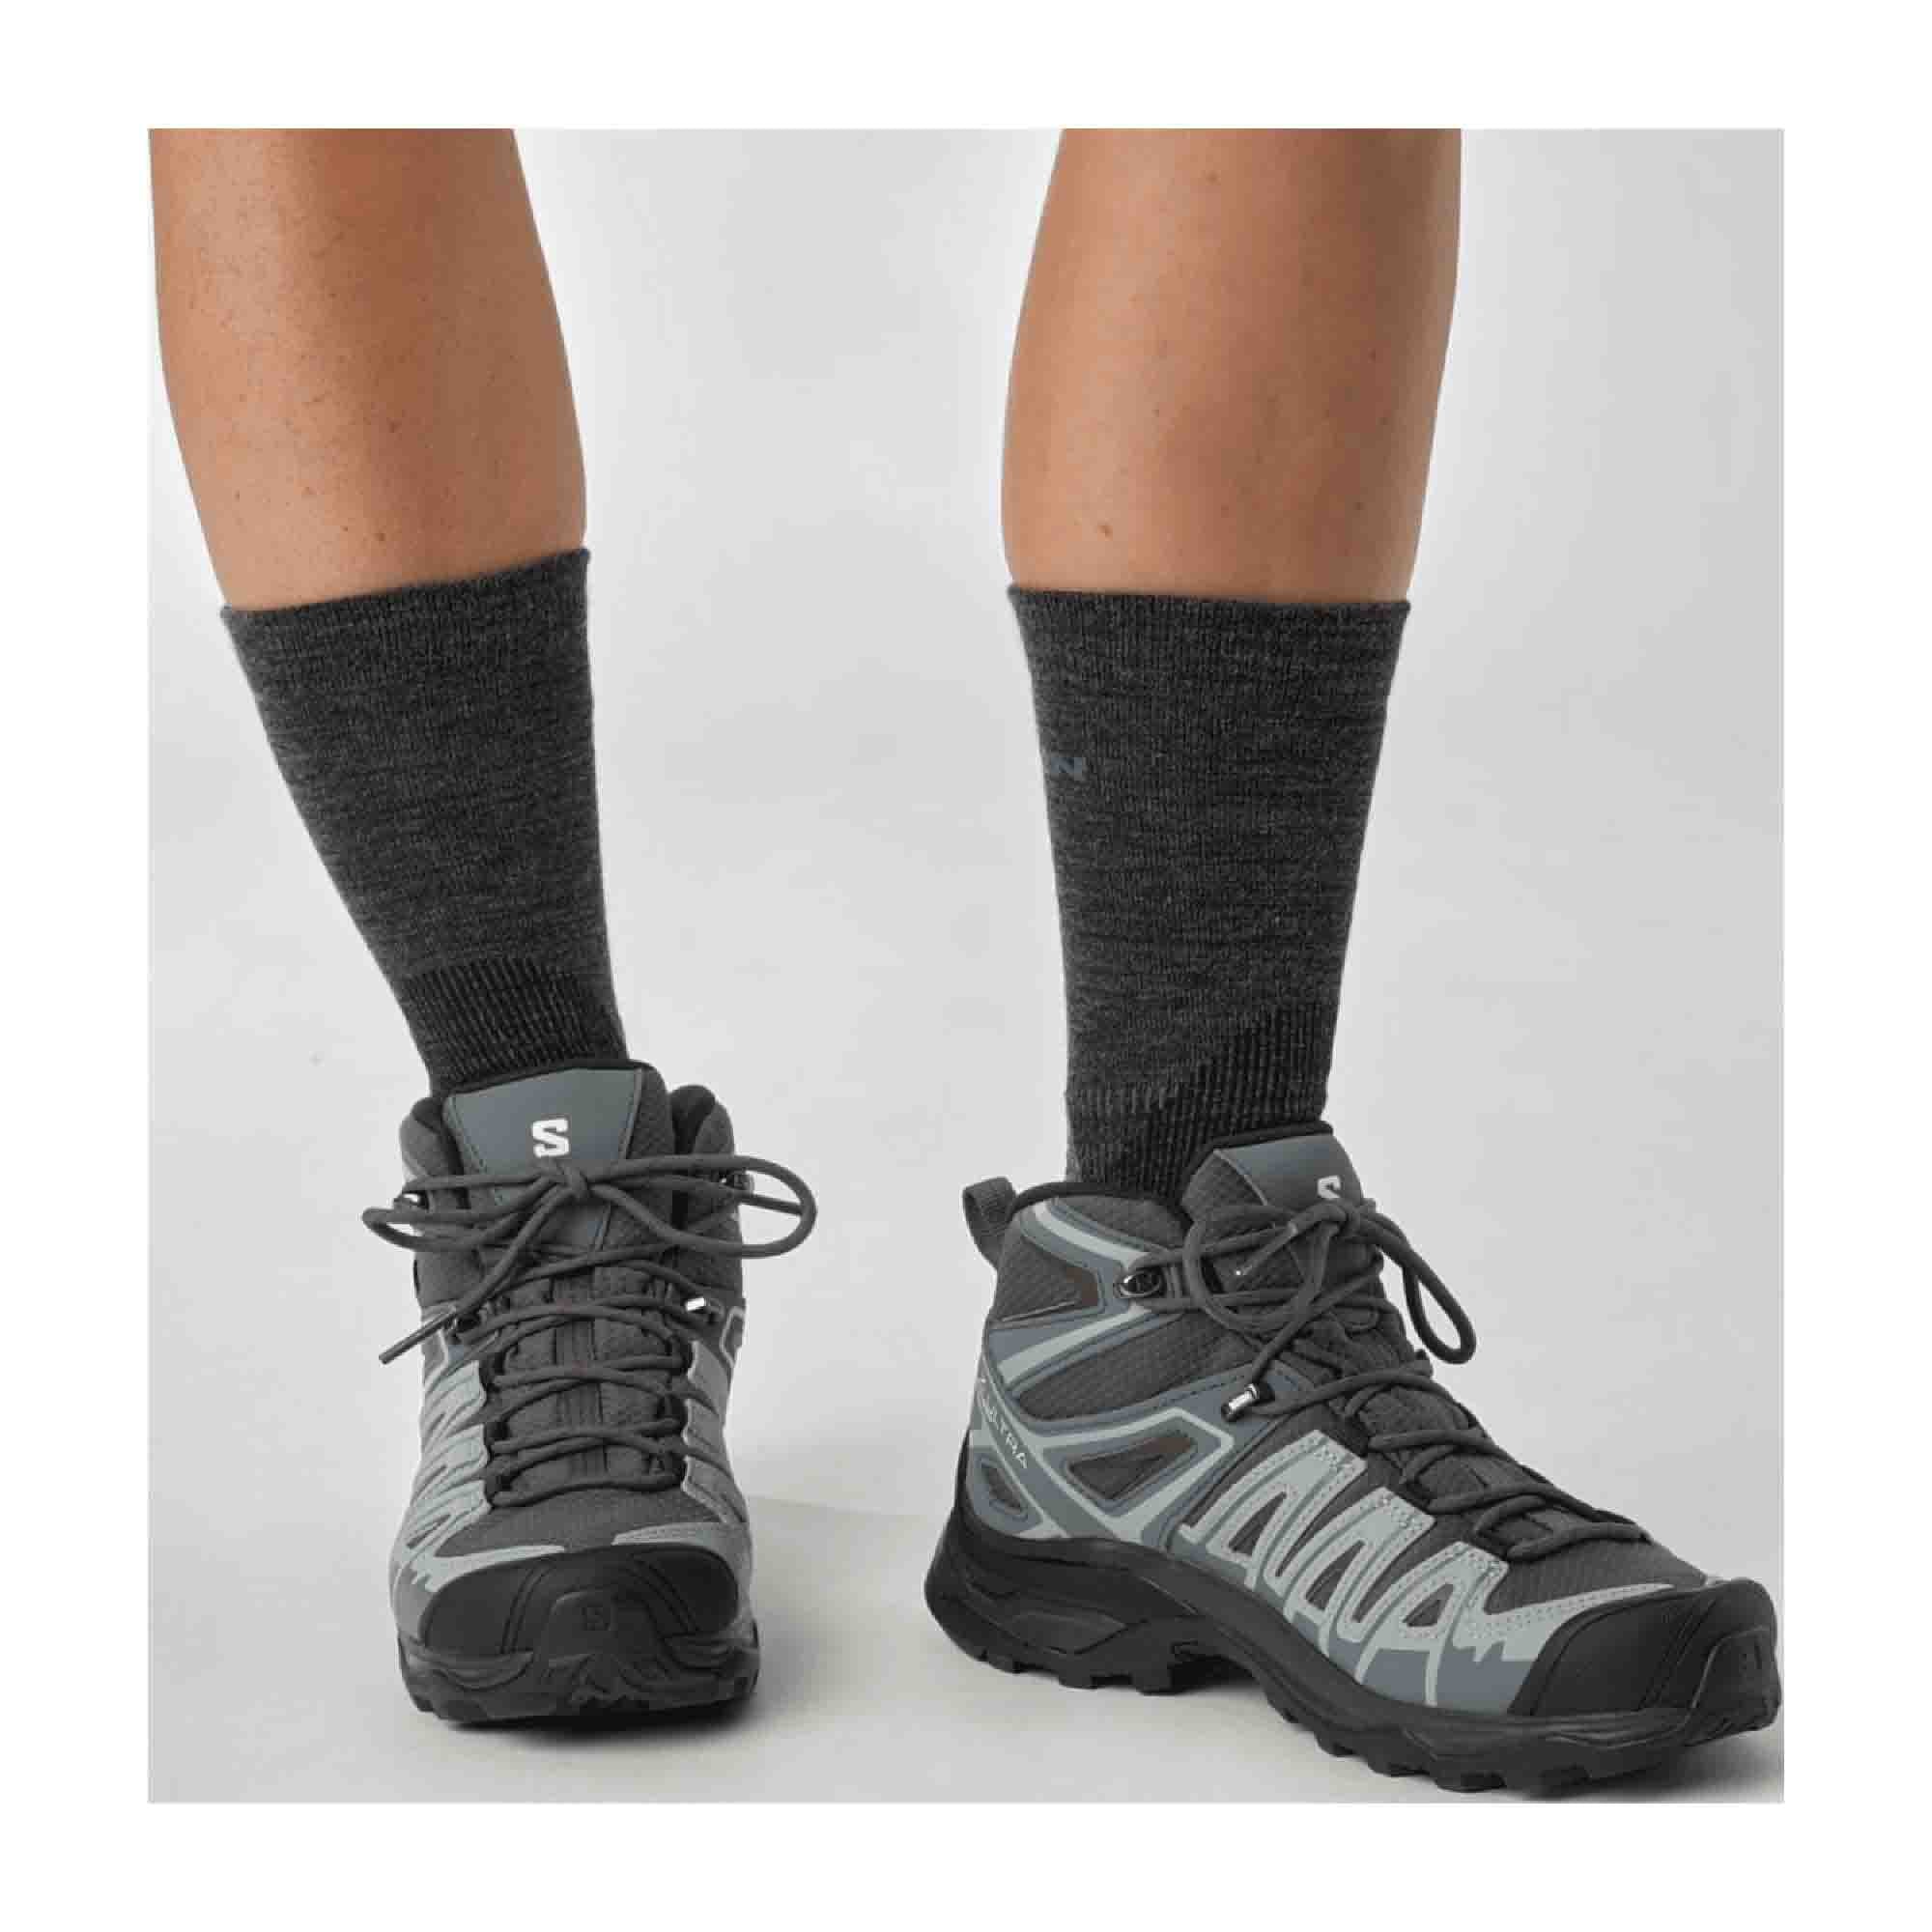 Salomon shoes X ULTRA PIONEER MID GTX for women, gray